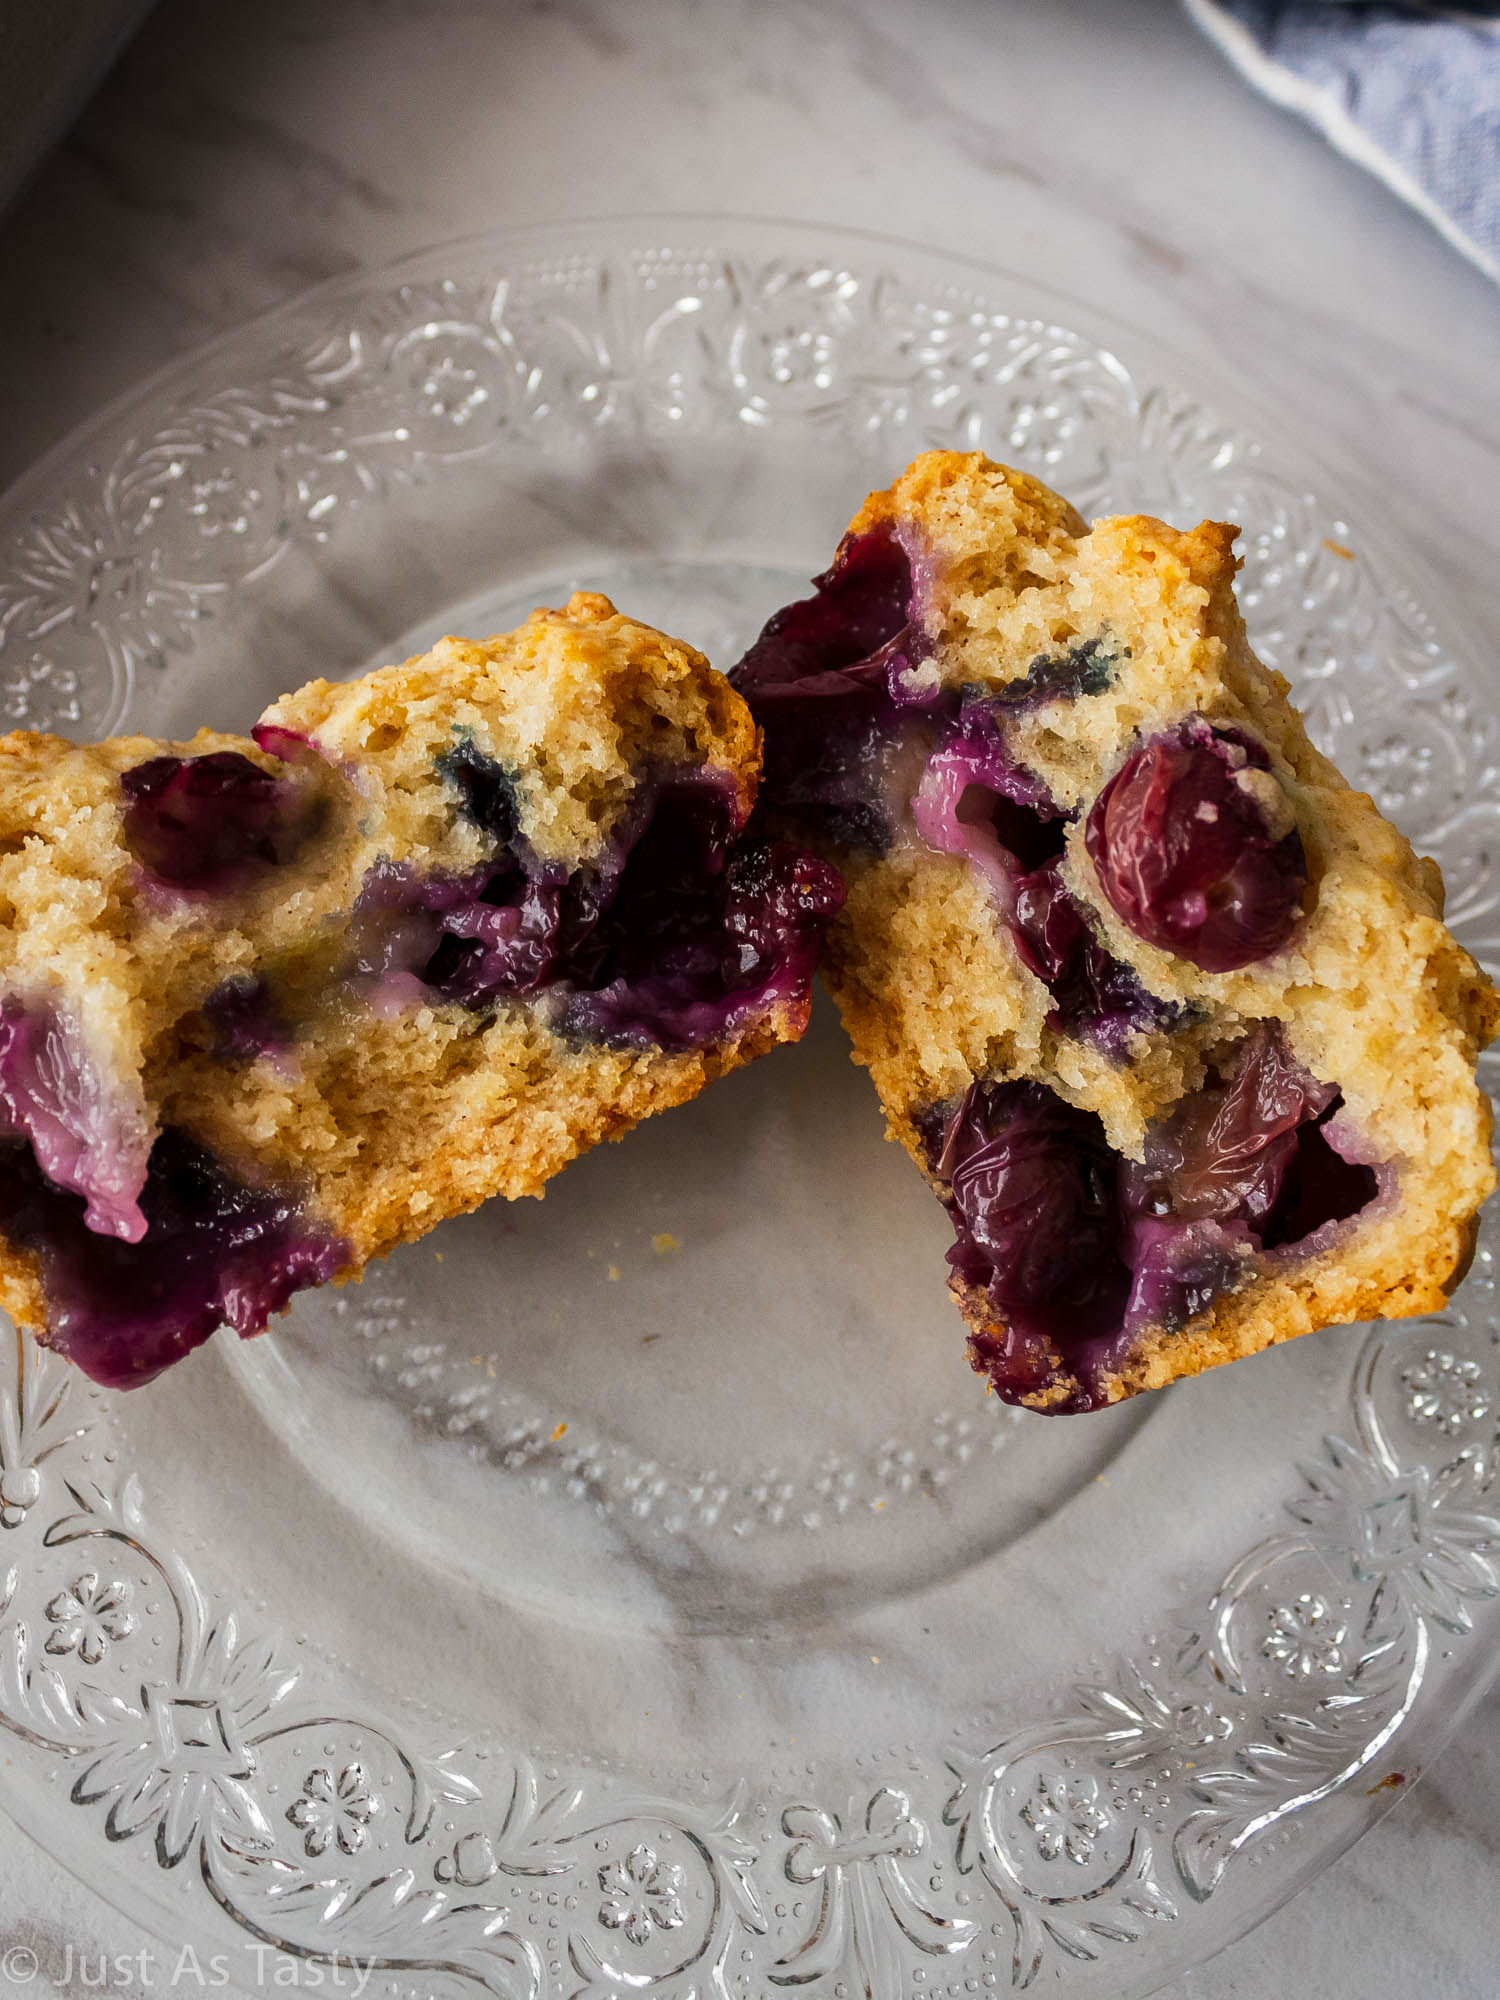 Close-up of a blueberry muffin cut in half.